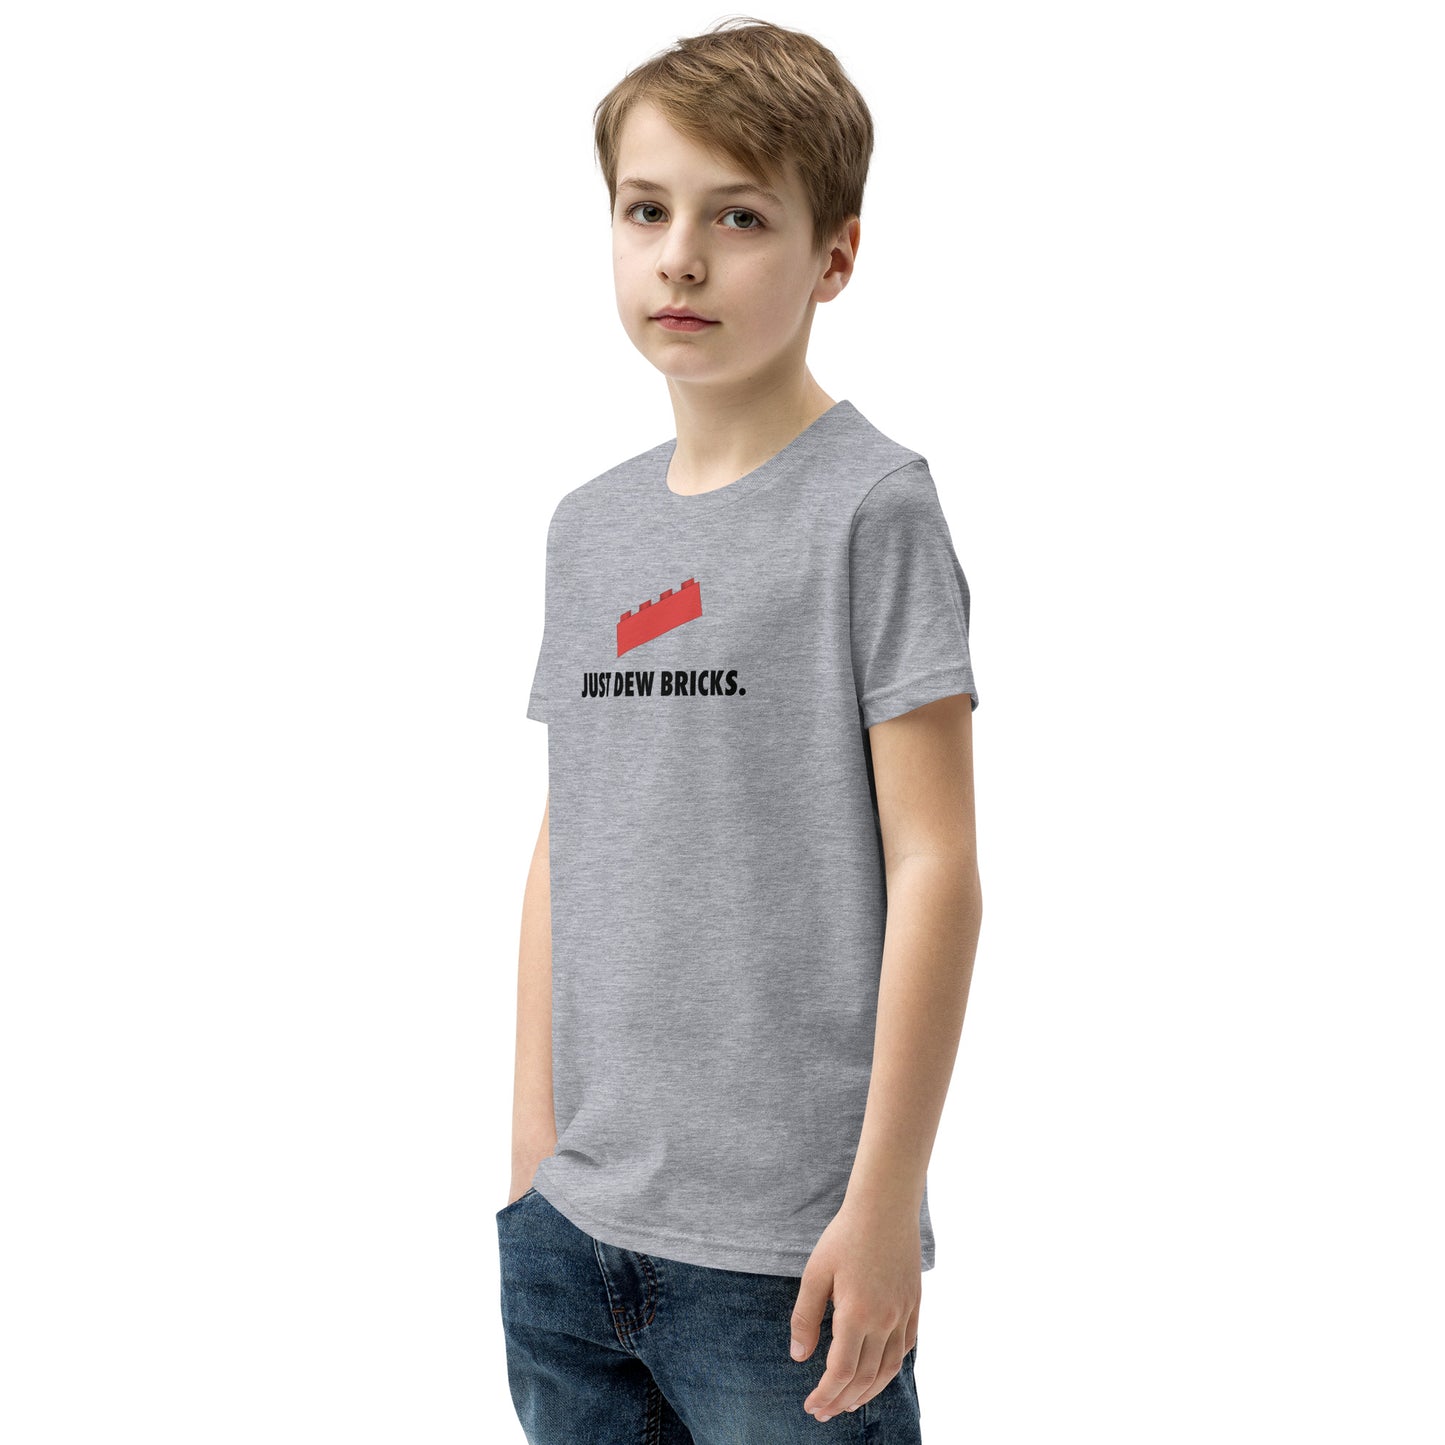 Just Dew Bricks - Youth Short Sleeve T-Shirt